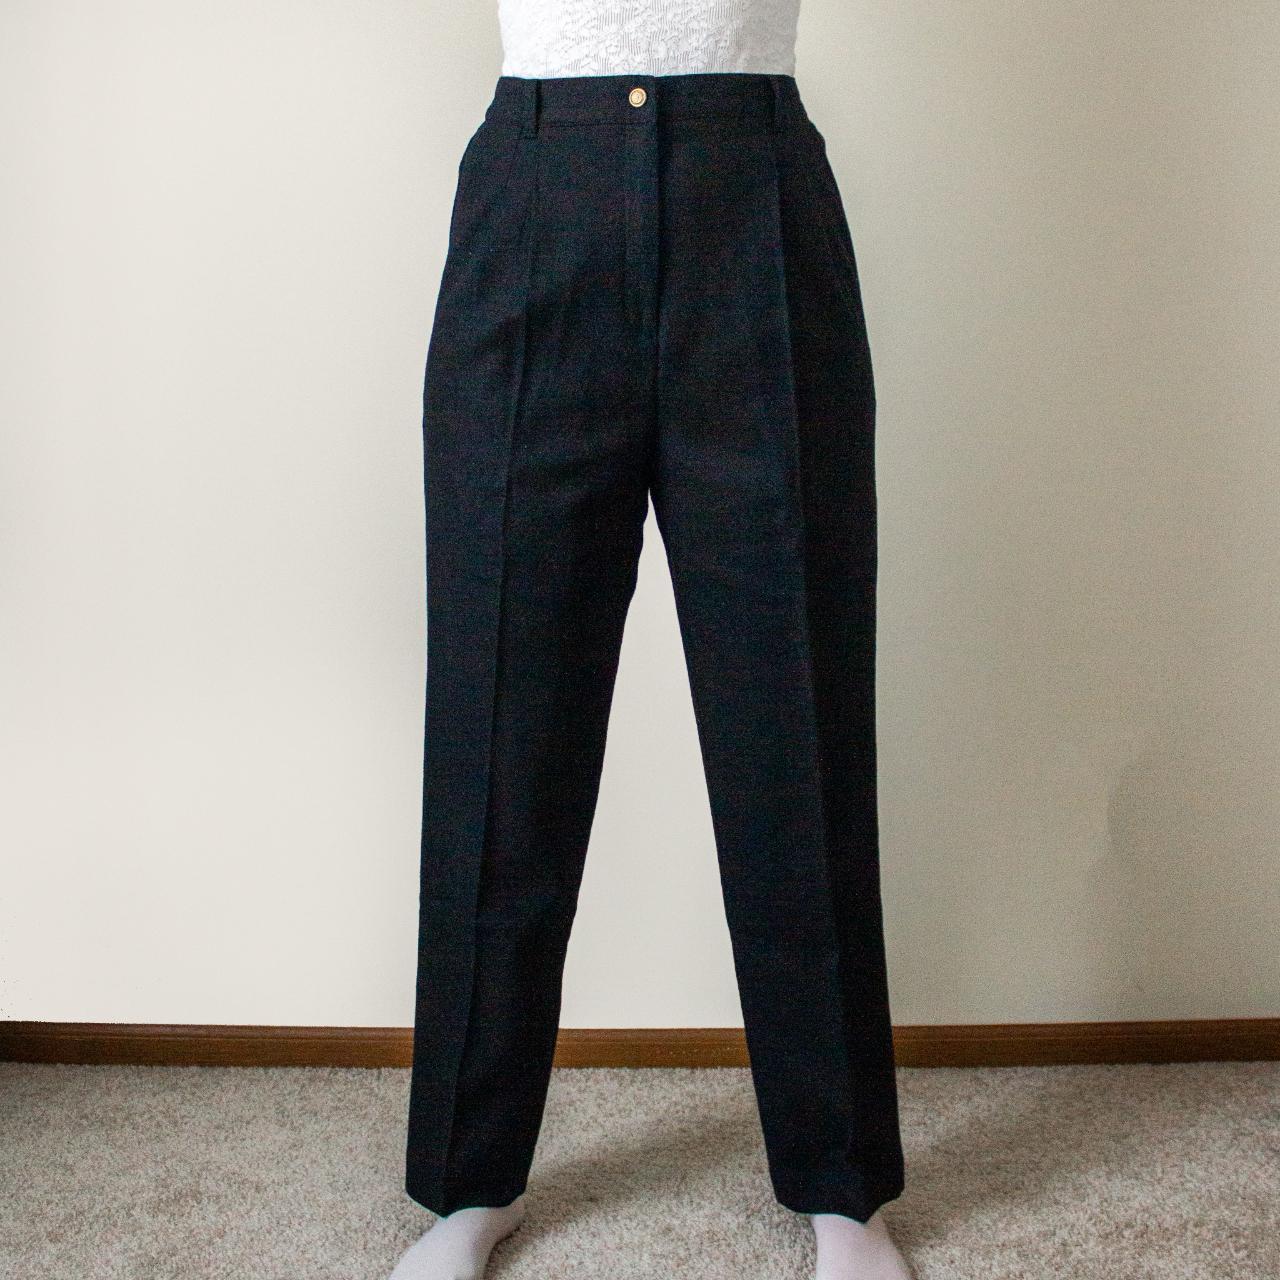 Sag Harbor Women's Black Trousers (3)